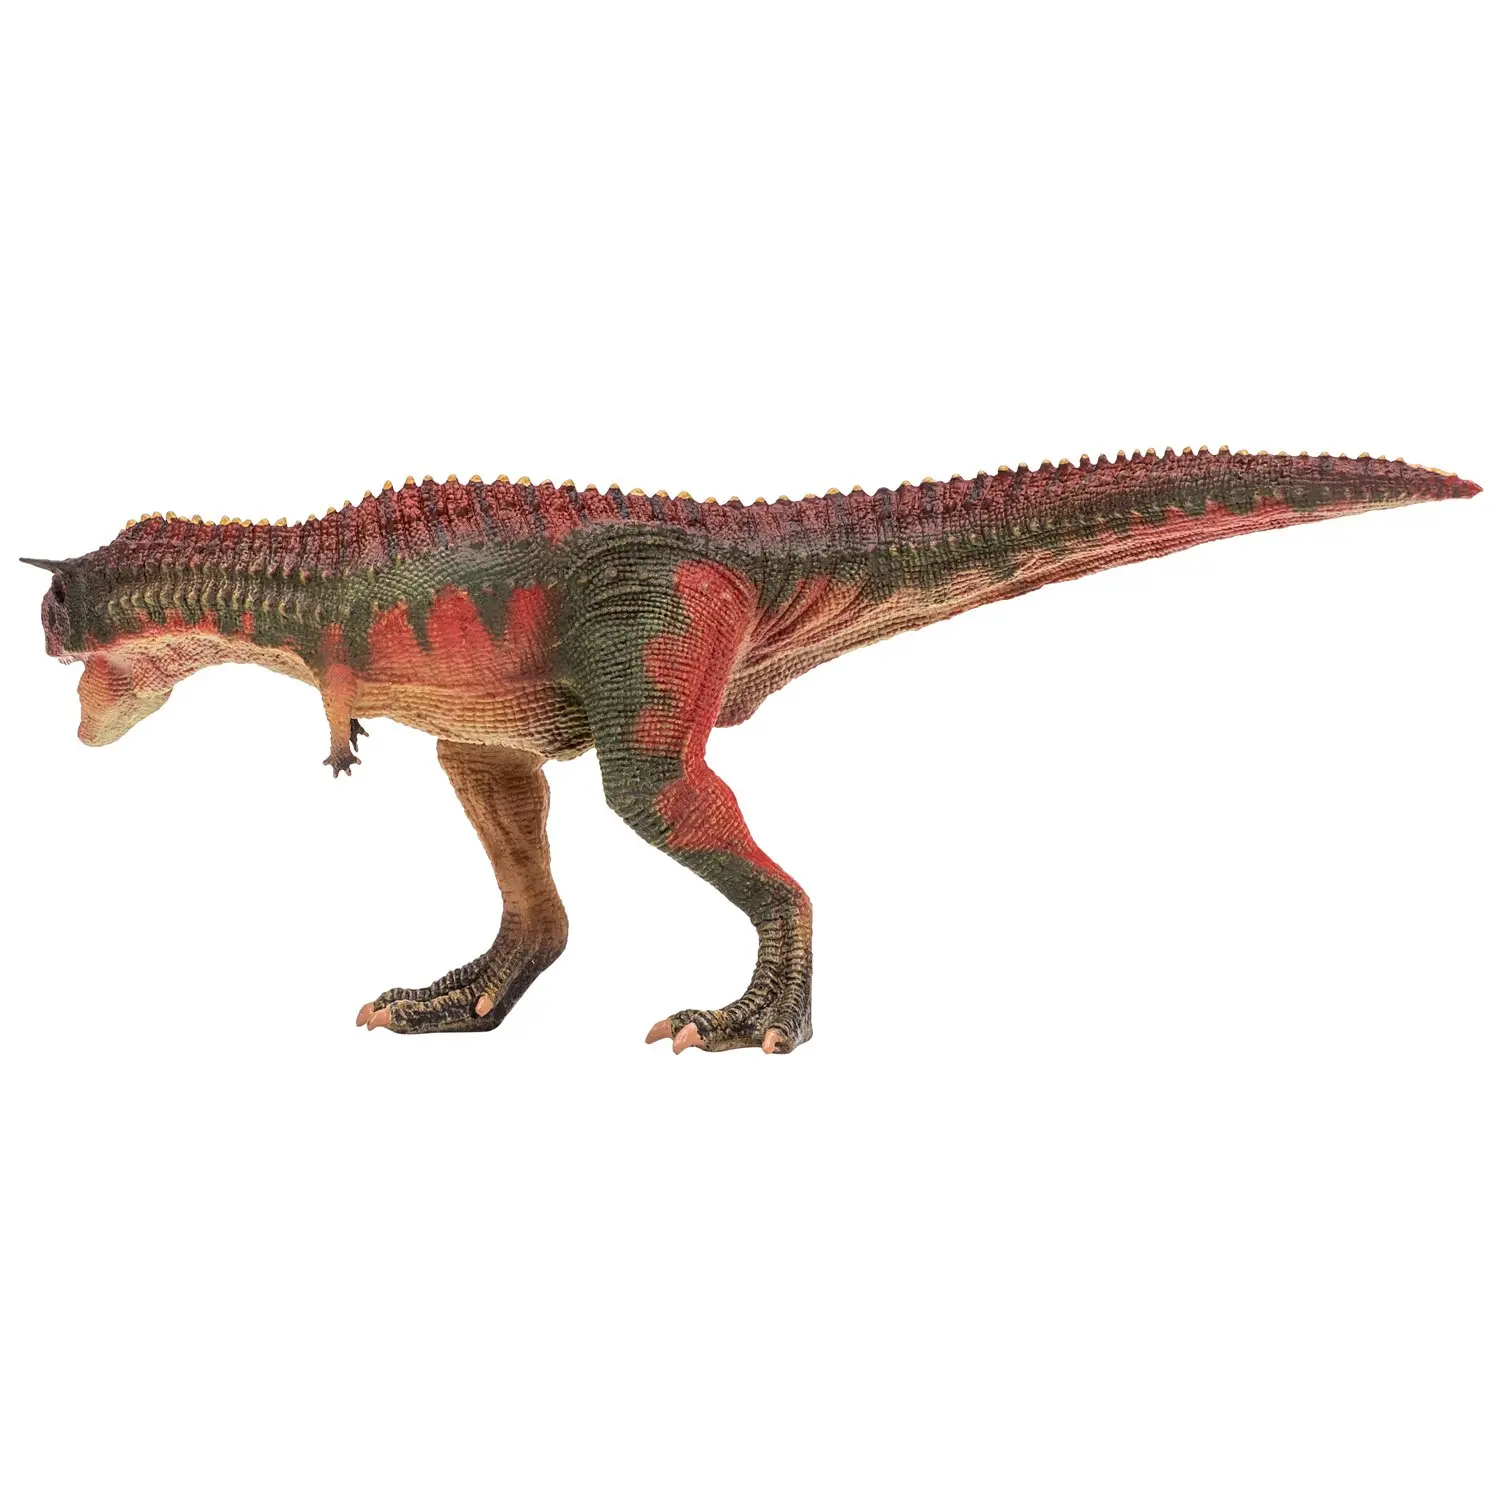 Карнотавр мир. Карнотавр динозавр игрушка. Карнотавр Schleich 14527. Фигурка 1toy Robolife игрушка Карнотавр, звуковой эффект (т22008). Jurassic World Карнотавр Торо.